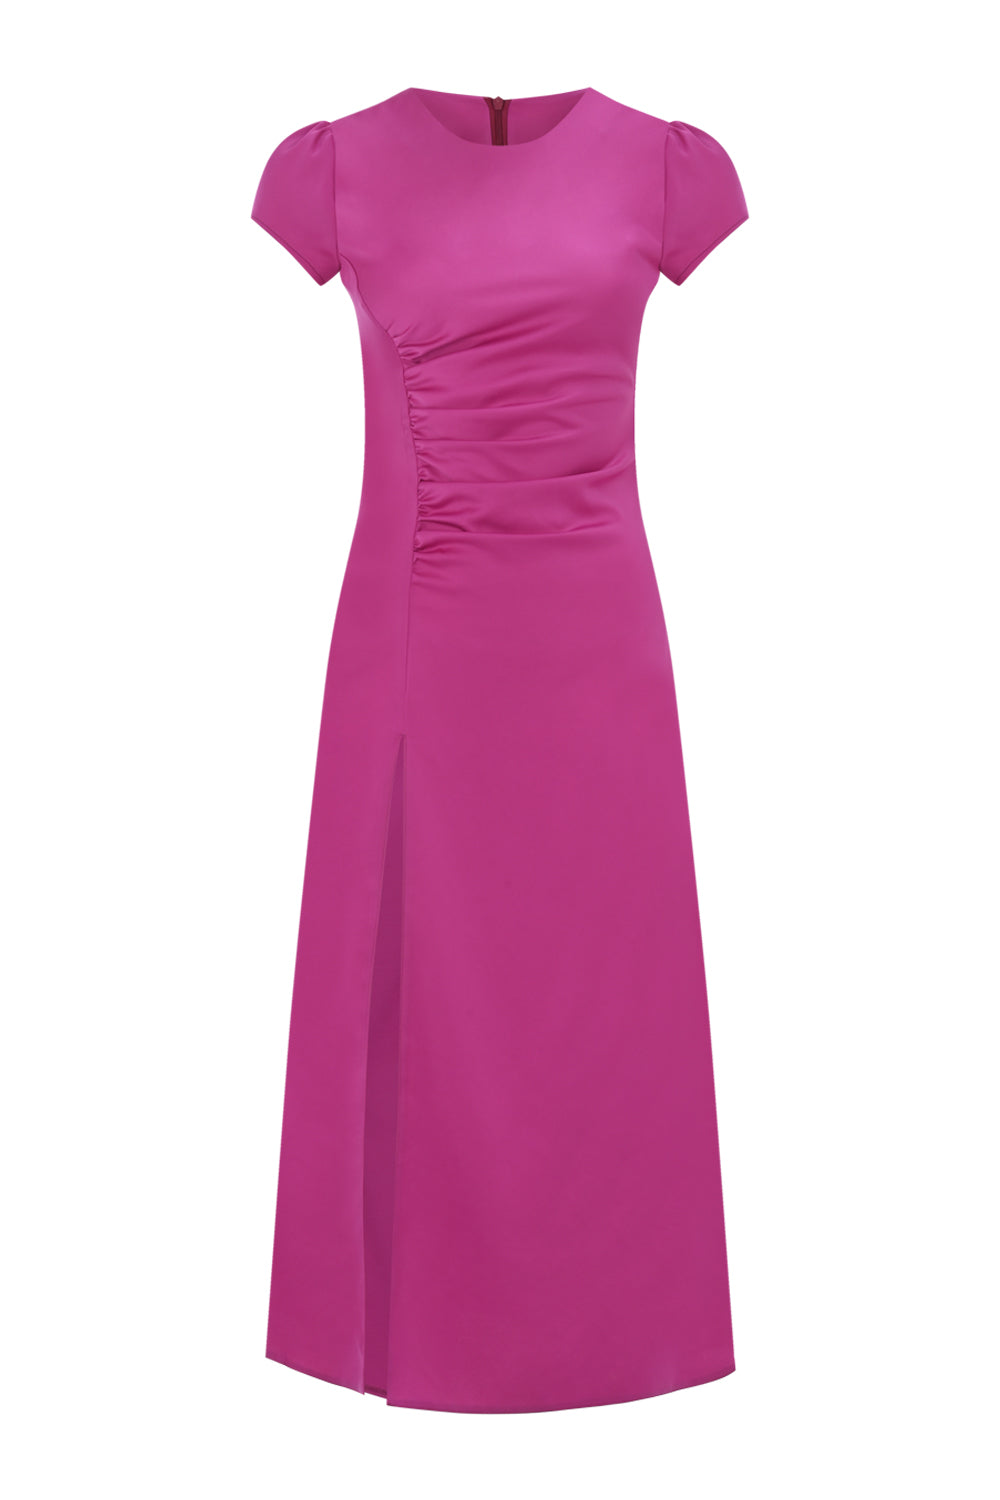 Silky Satin Midi Dress With Side Slit - Fuchsia Pink